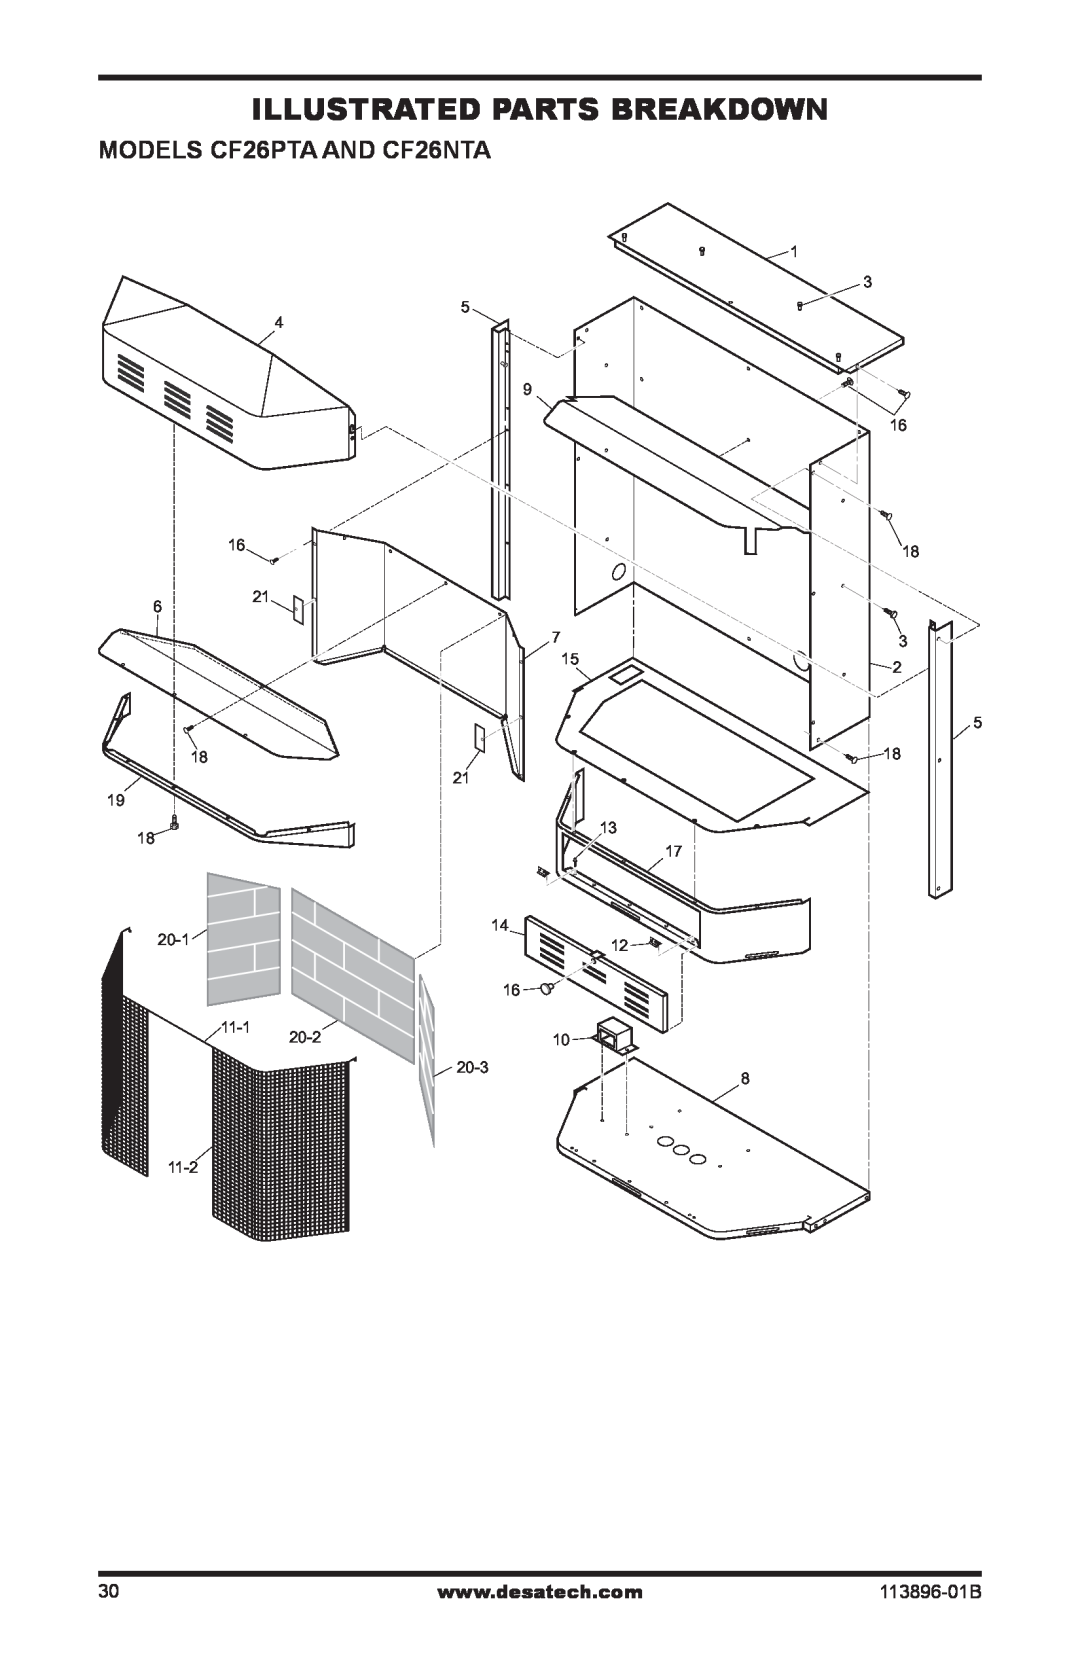 Desa installation manual Illustrated Parts Breakdown, MODELS CF26PTA AND CF26NTA, 113896-01B 